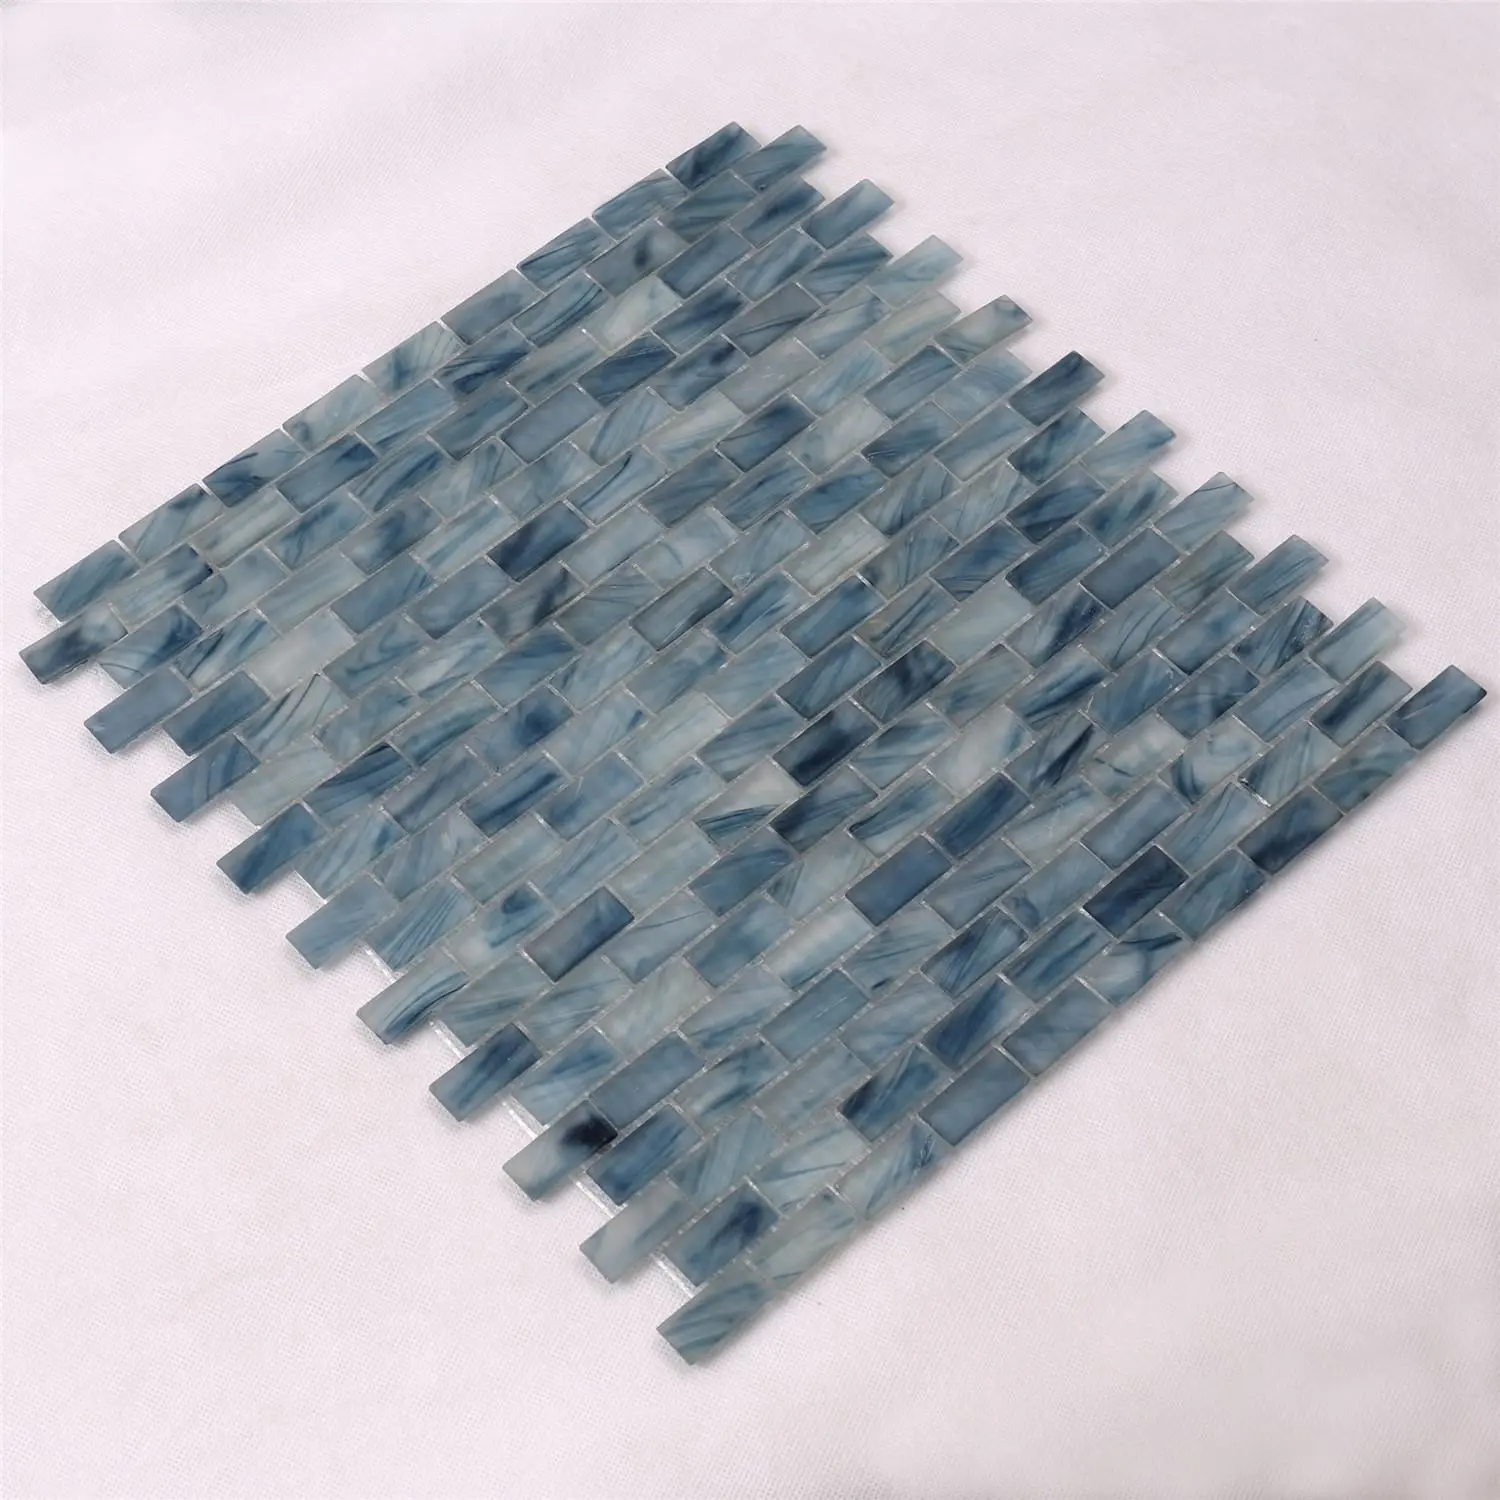 Latest mosaic tiles online ne748 factory for bathroom